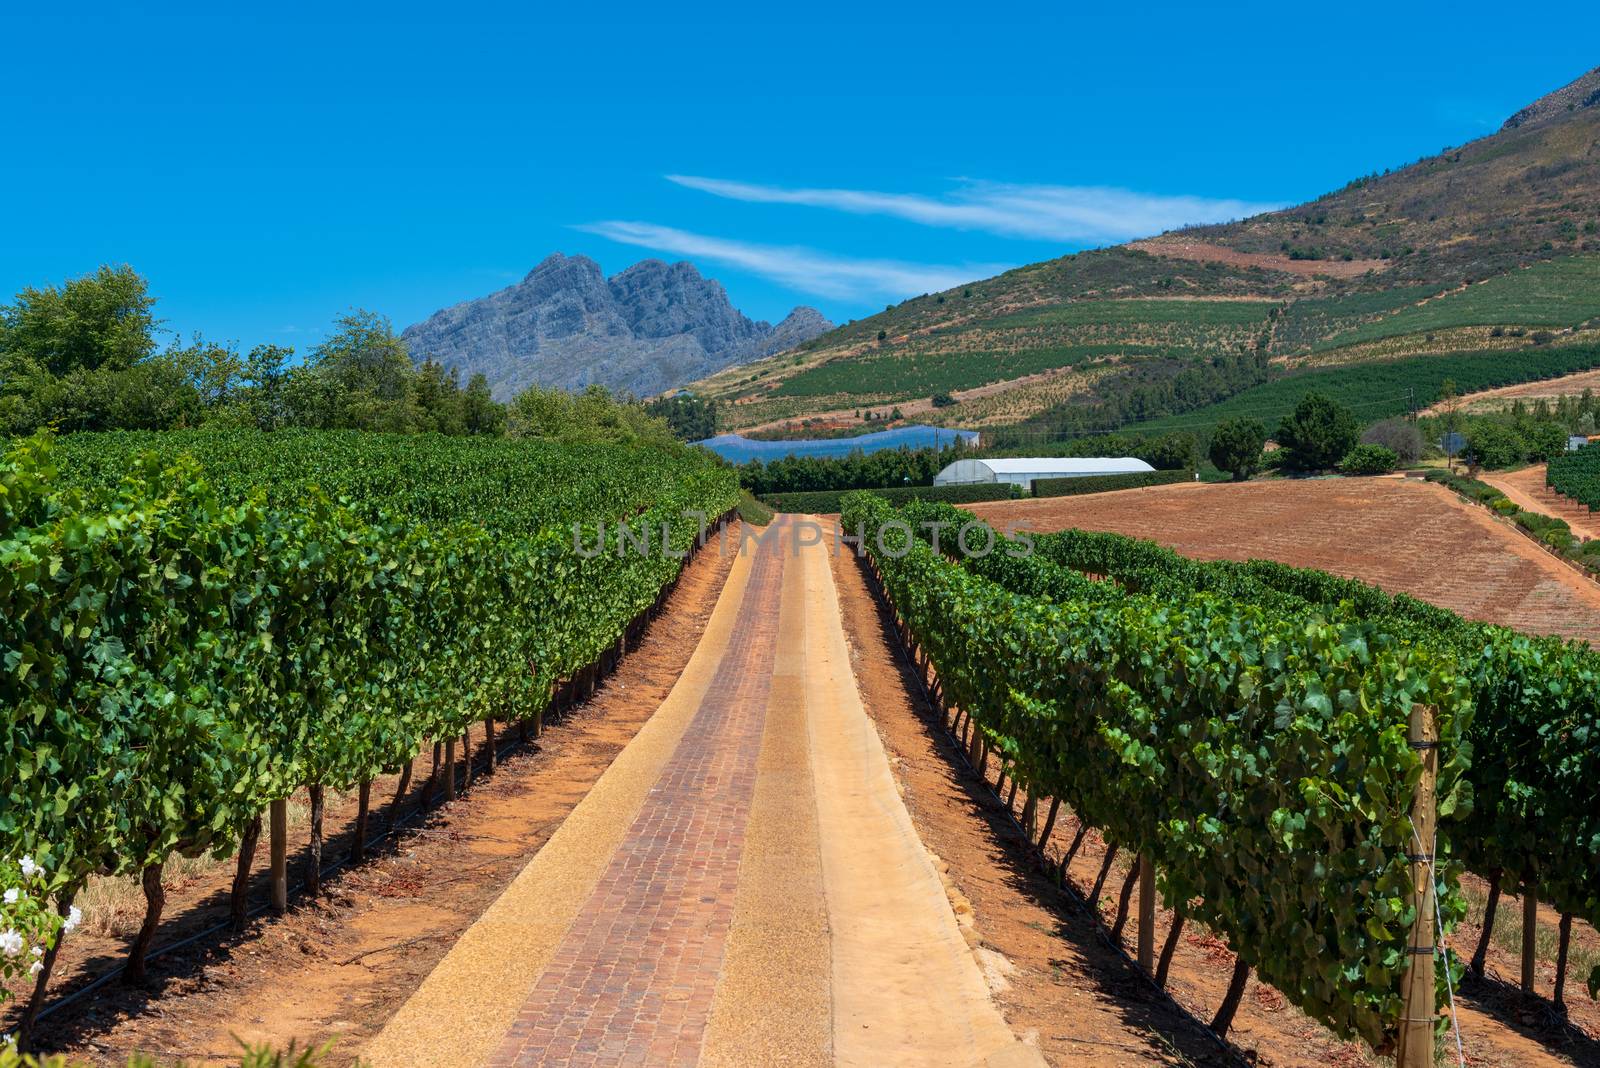 South African Vineyard by jfbenning